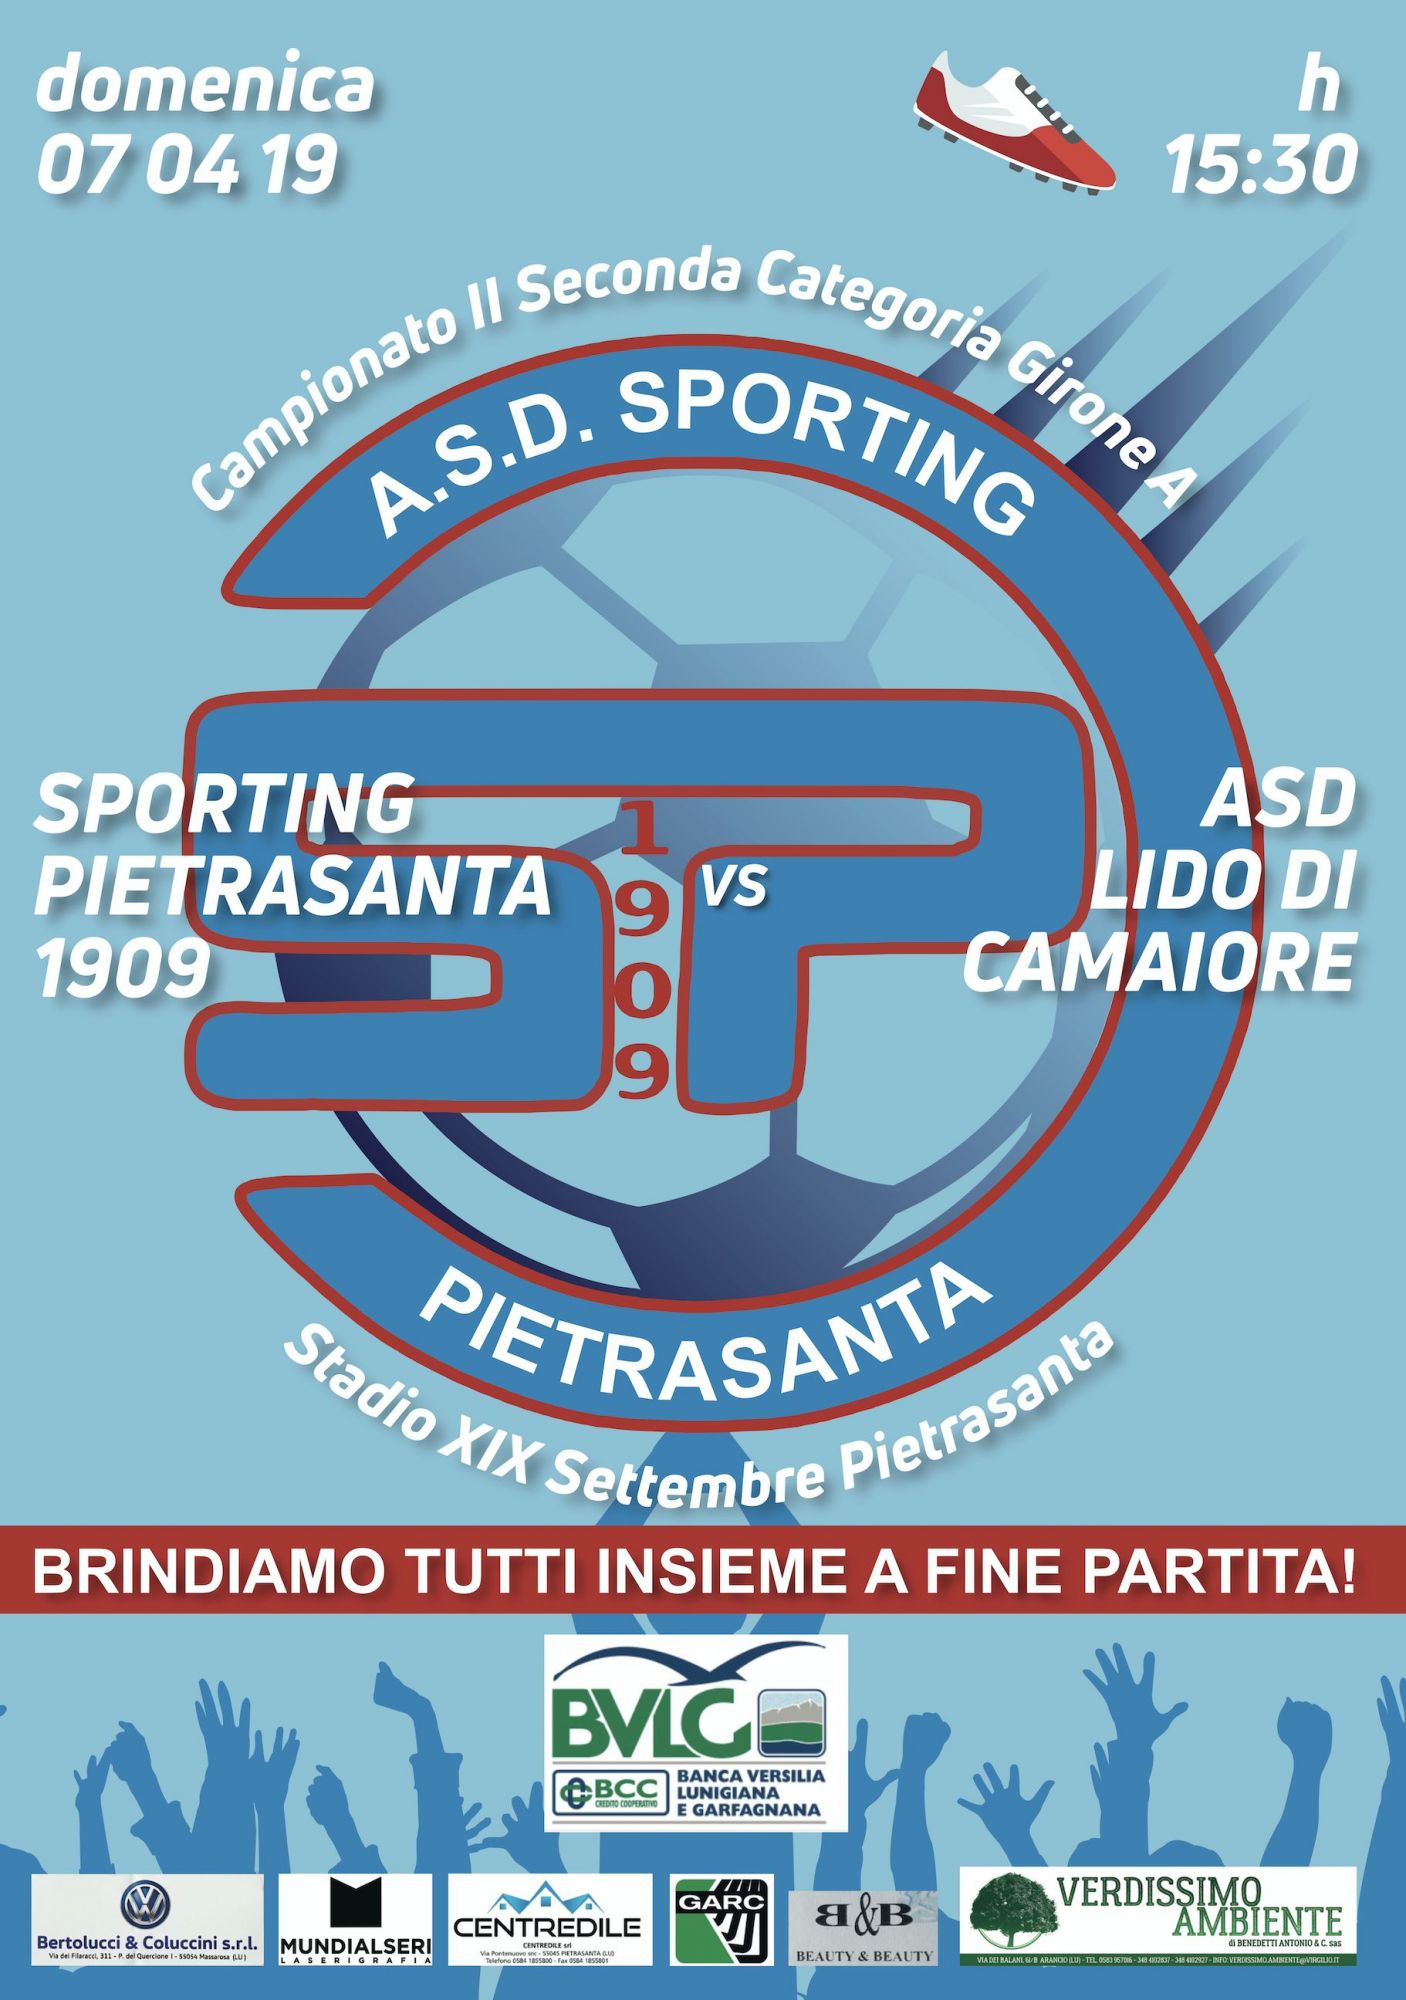 Grande festa per lo Sporting Pietrasanta 1909